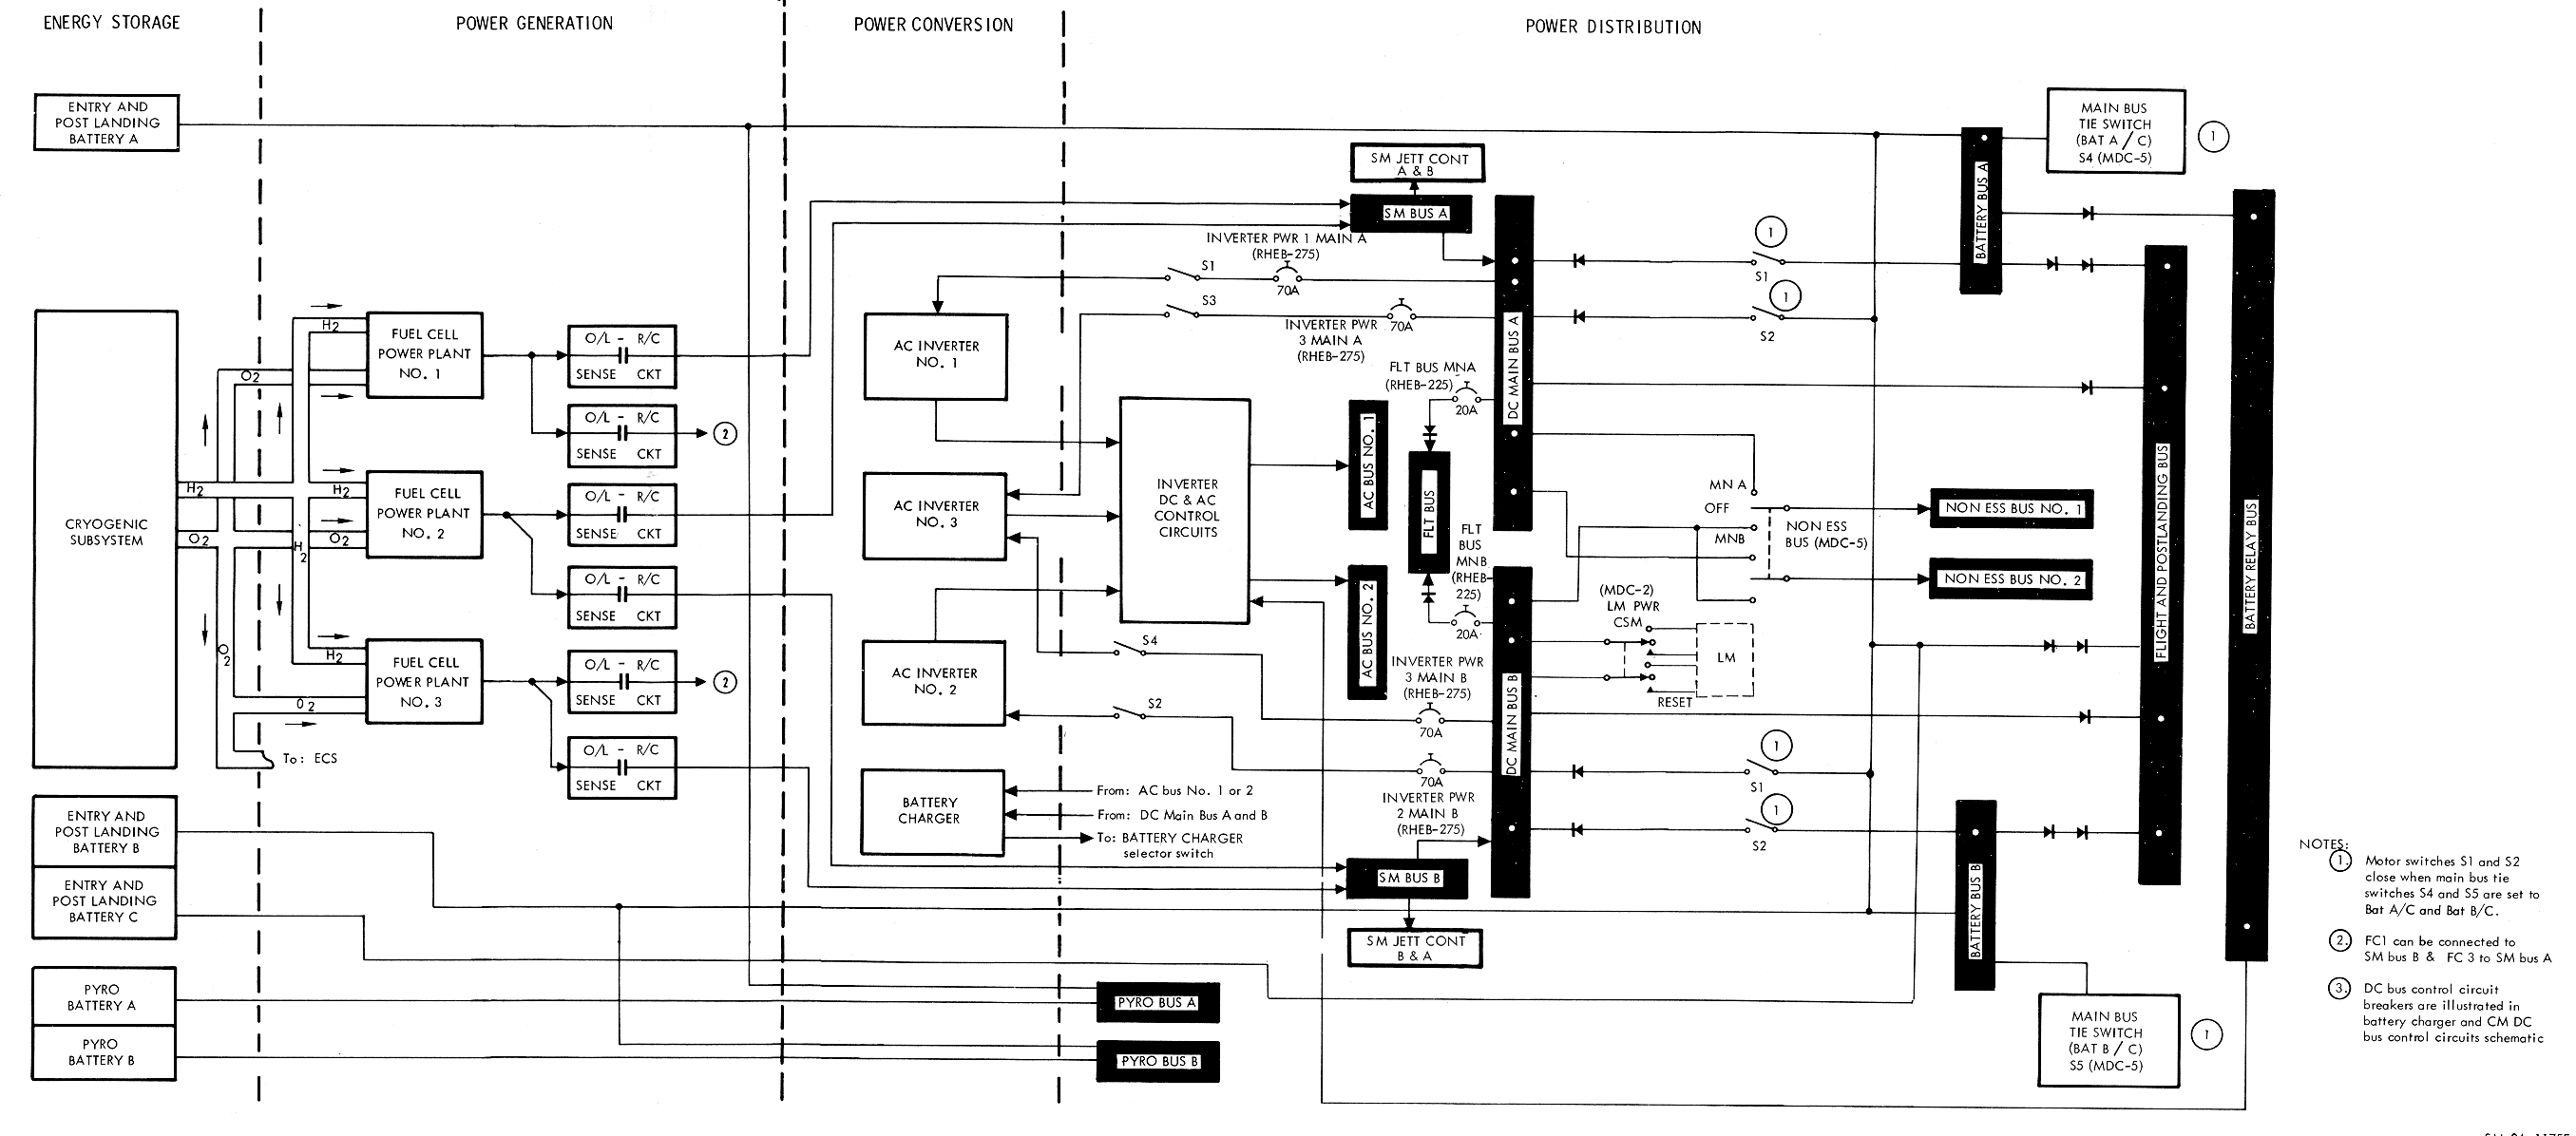 Electrical Power Subsystem Block Diagram